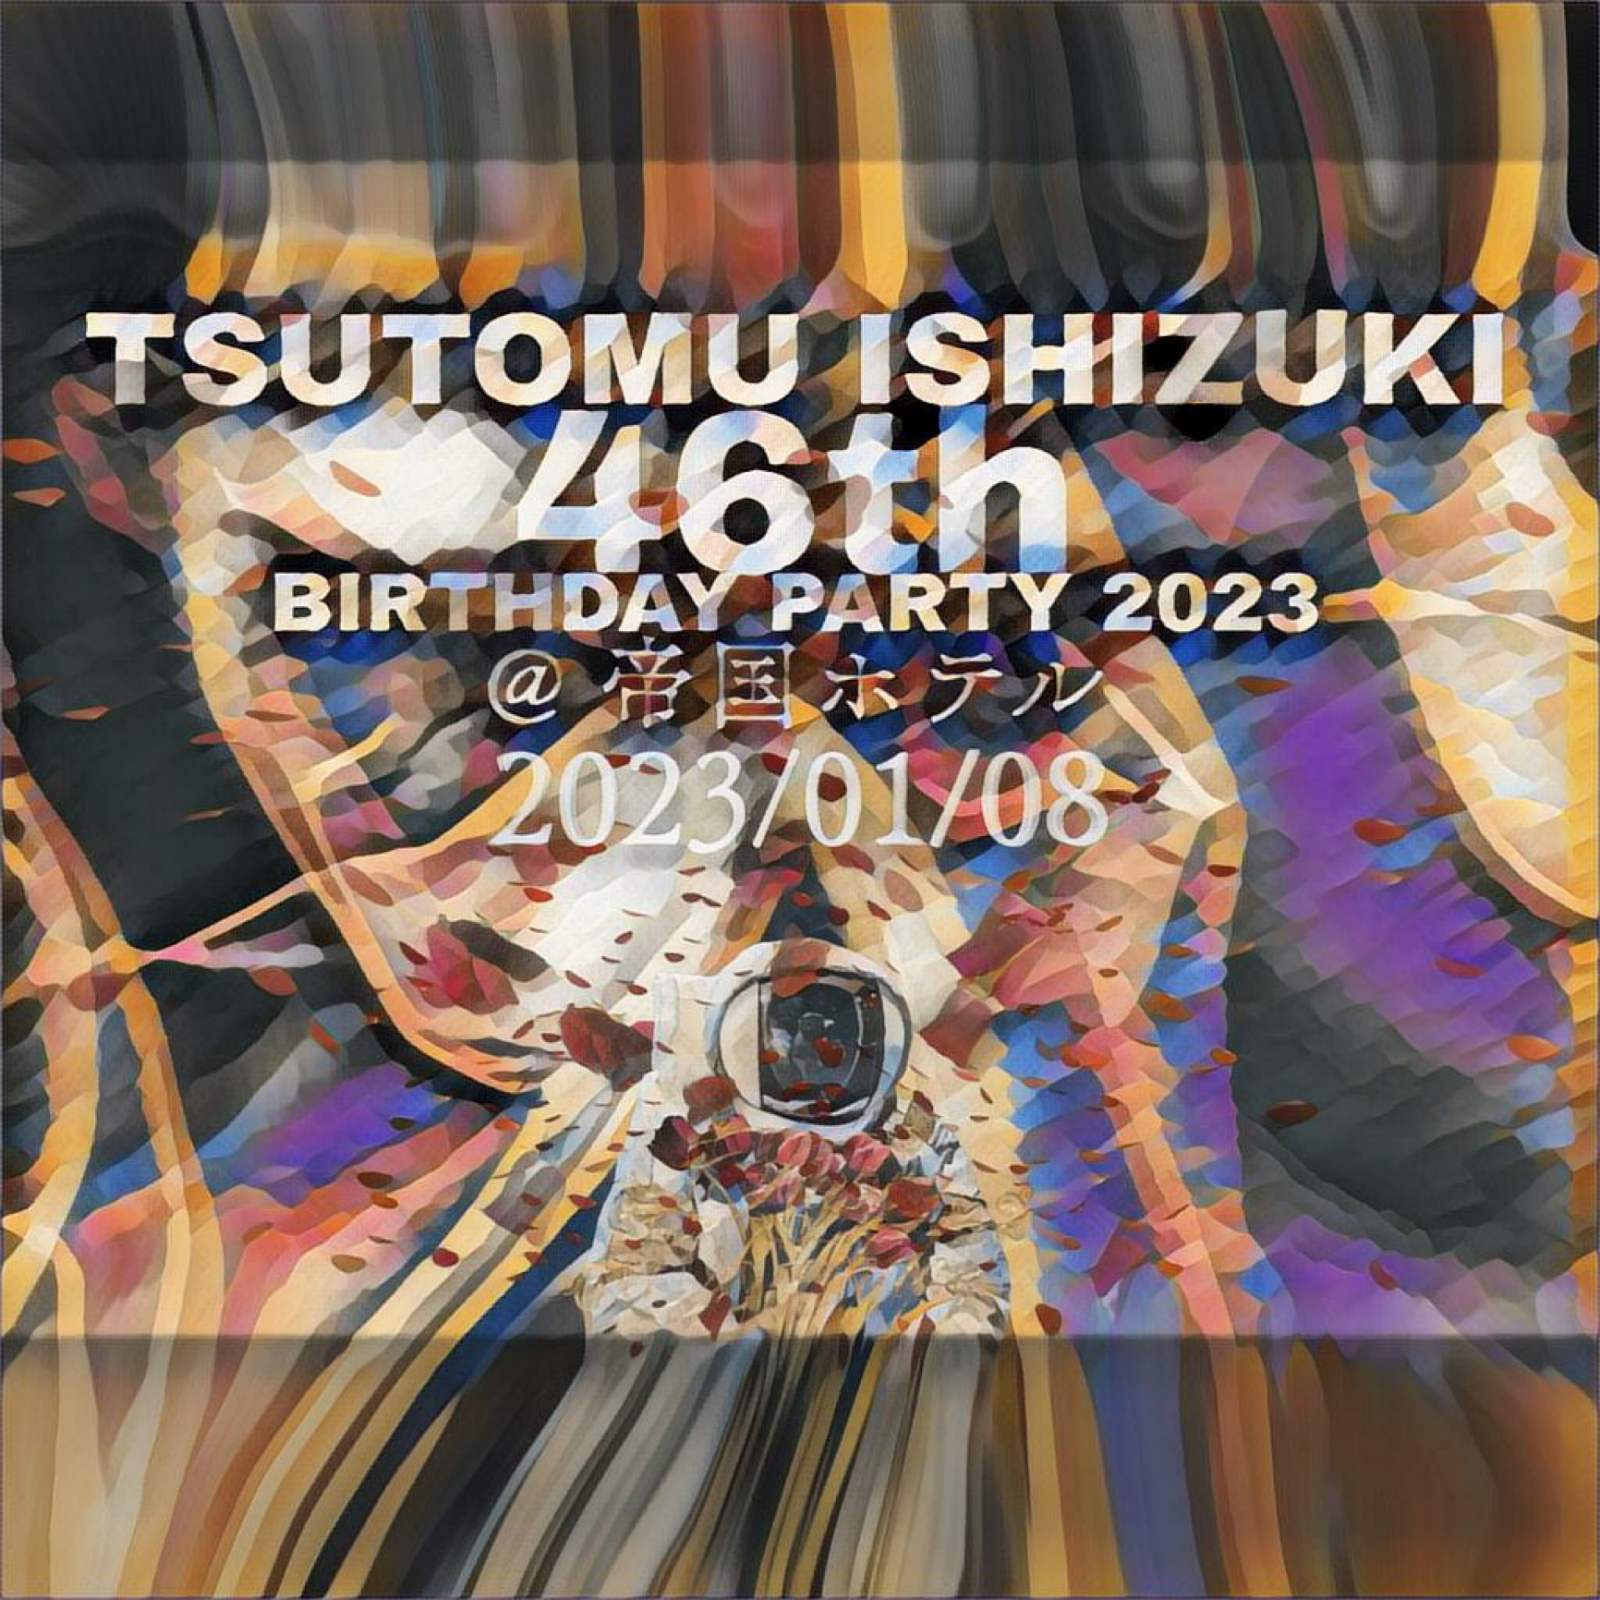 2023 TSUTOMU ISHIZUKI BIRTHDAY PARTY 2部